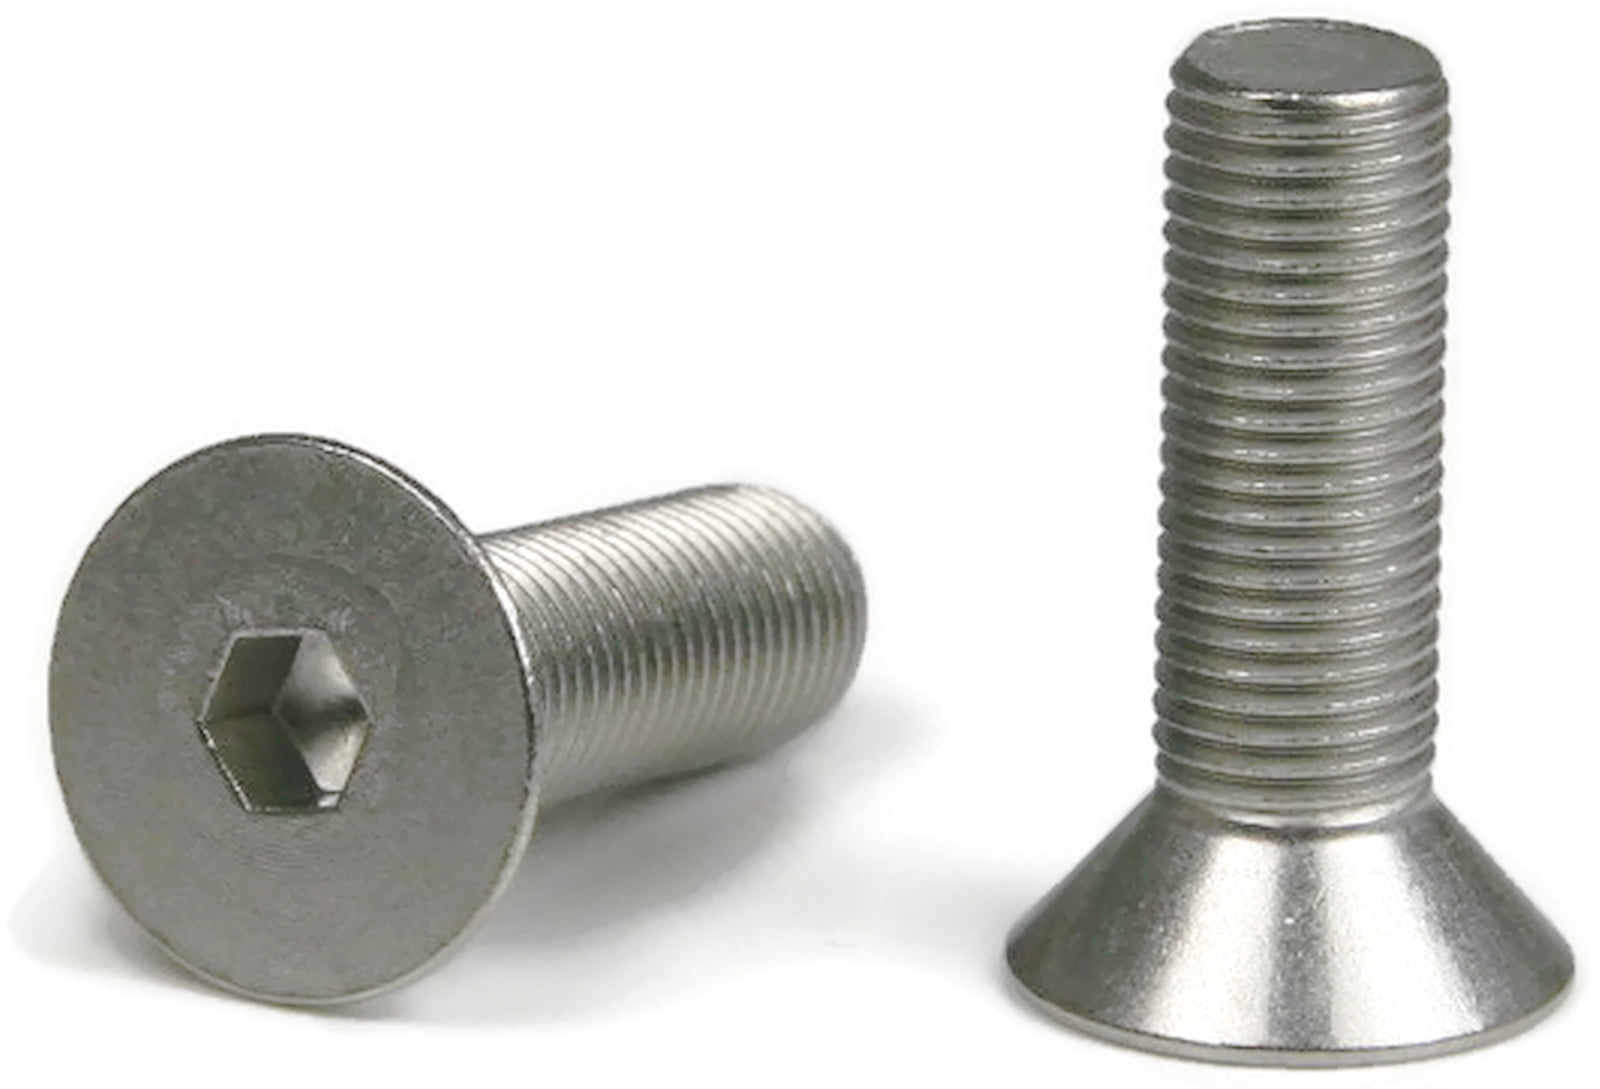 50 each Stainless Steel Button Head Socket Cap Screw 1/4-28 x 1-1/4 